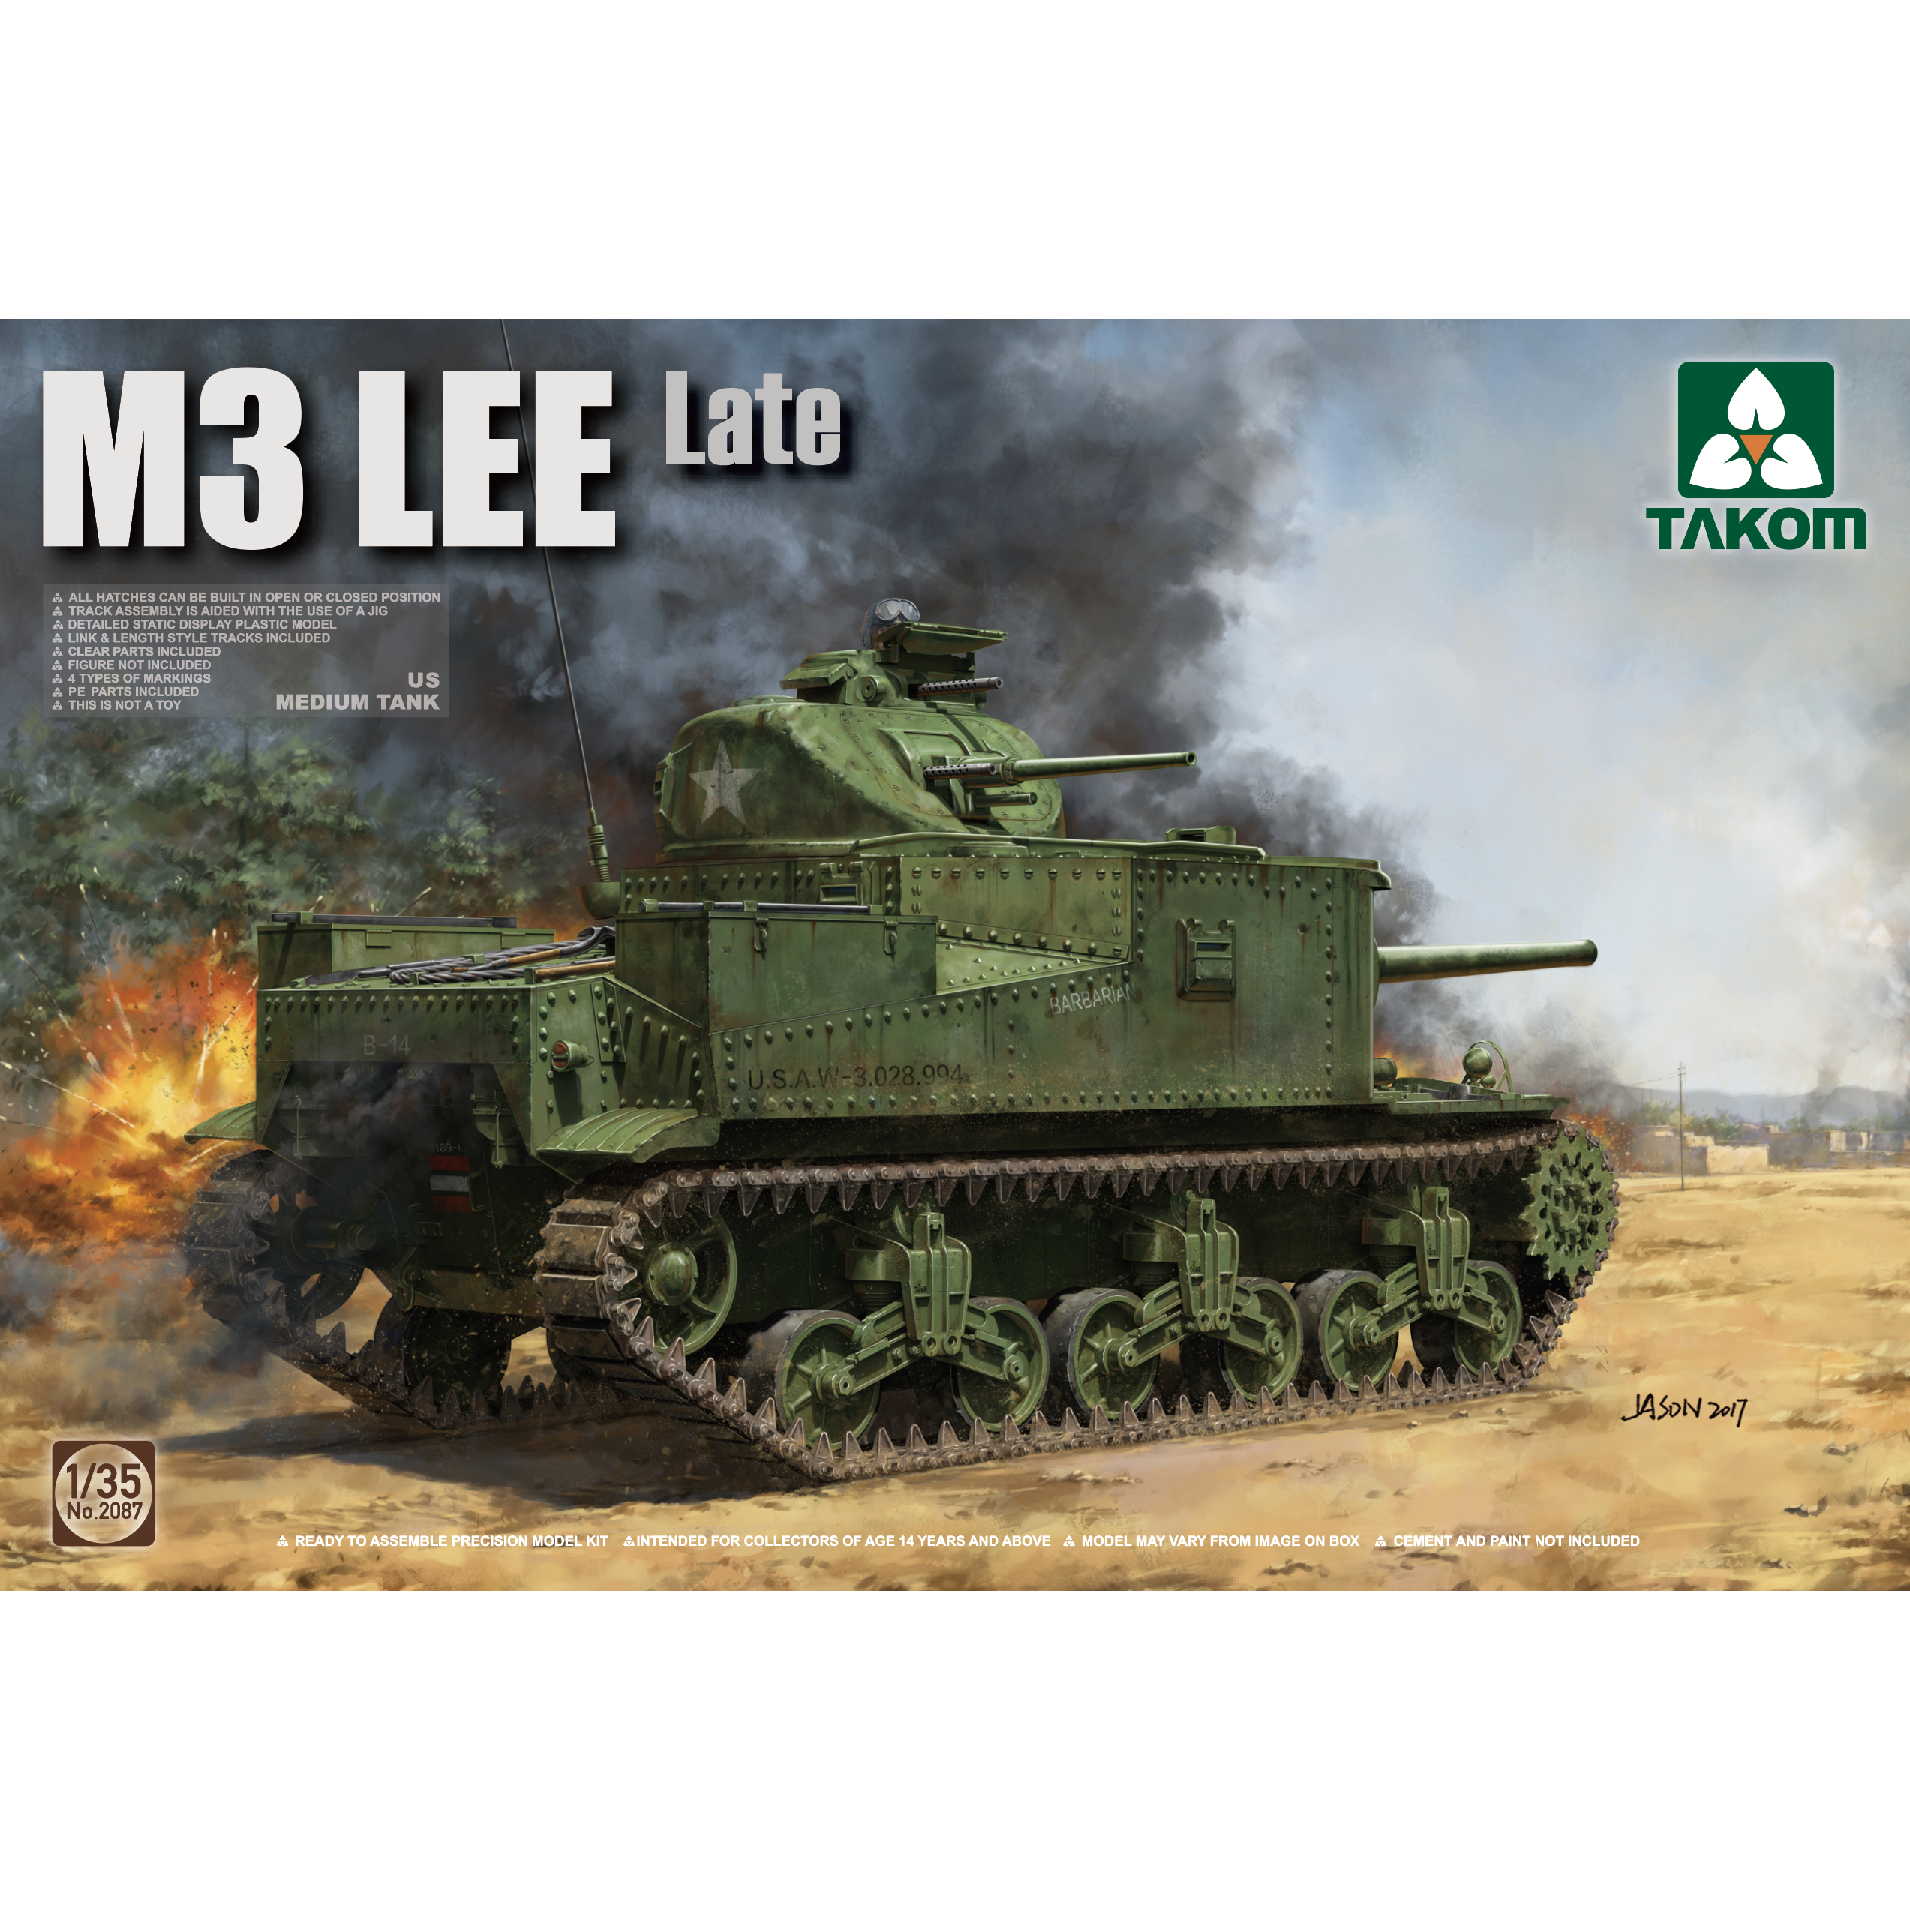 US Medium Tank M3 Lee Late 1/35 by Takom